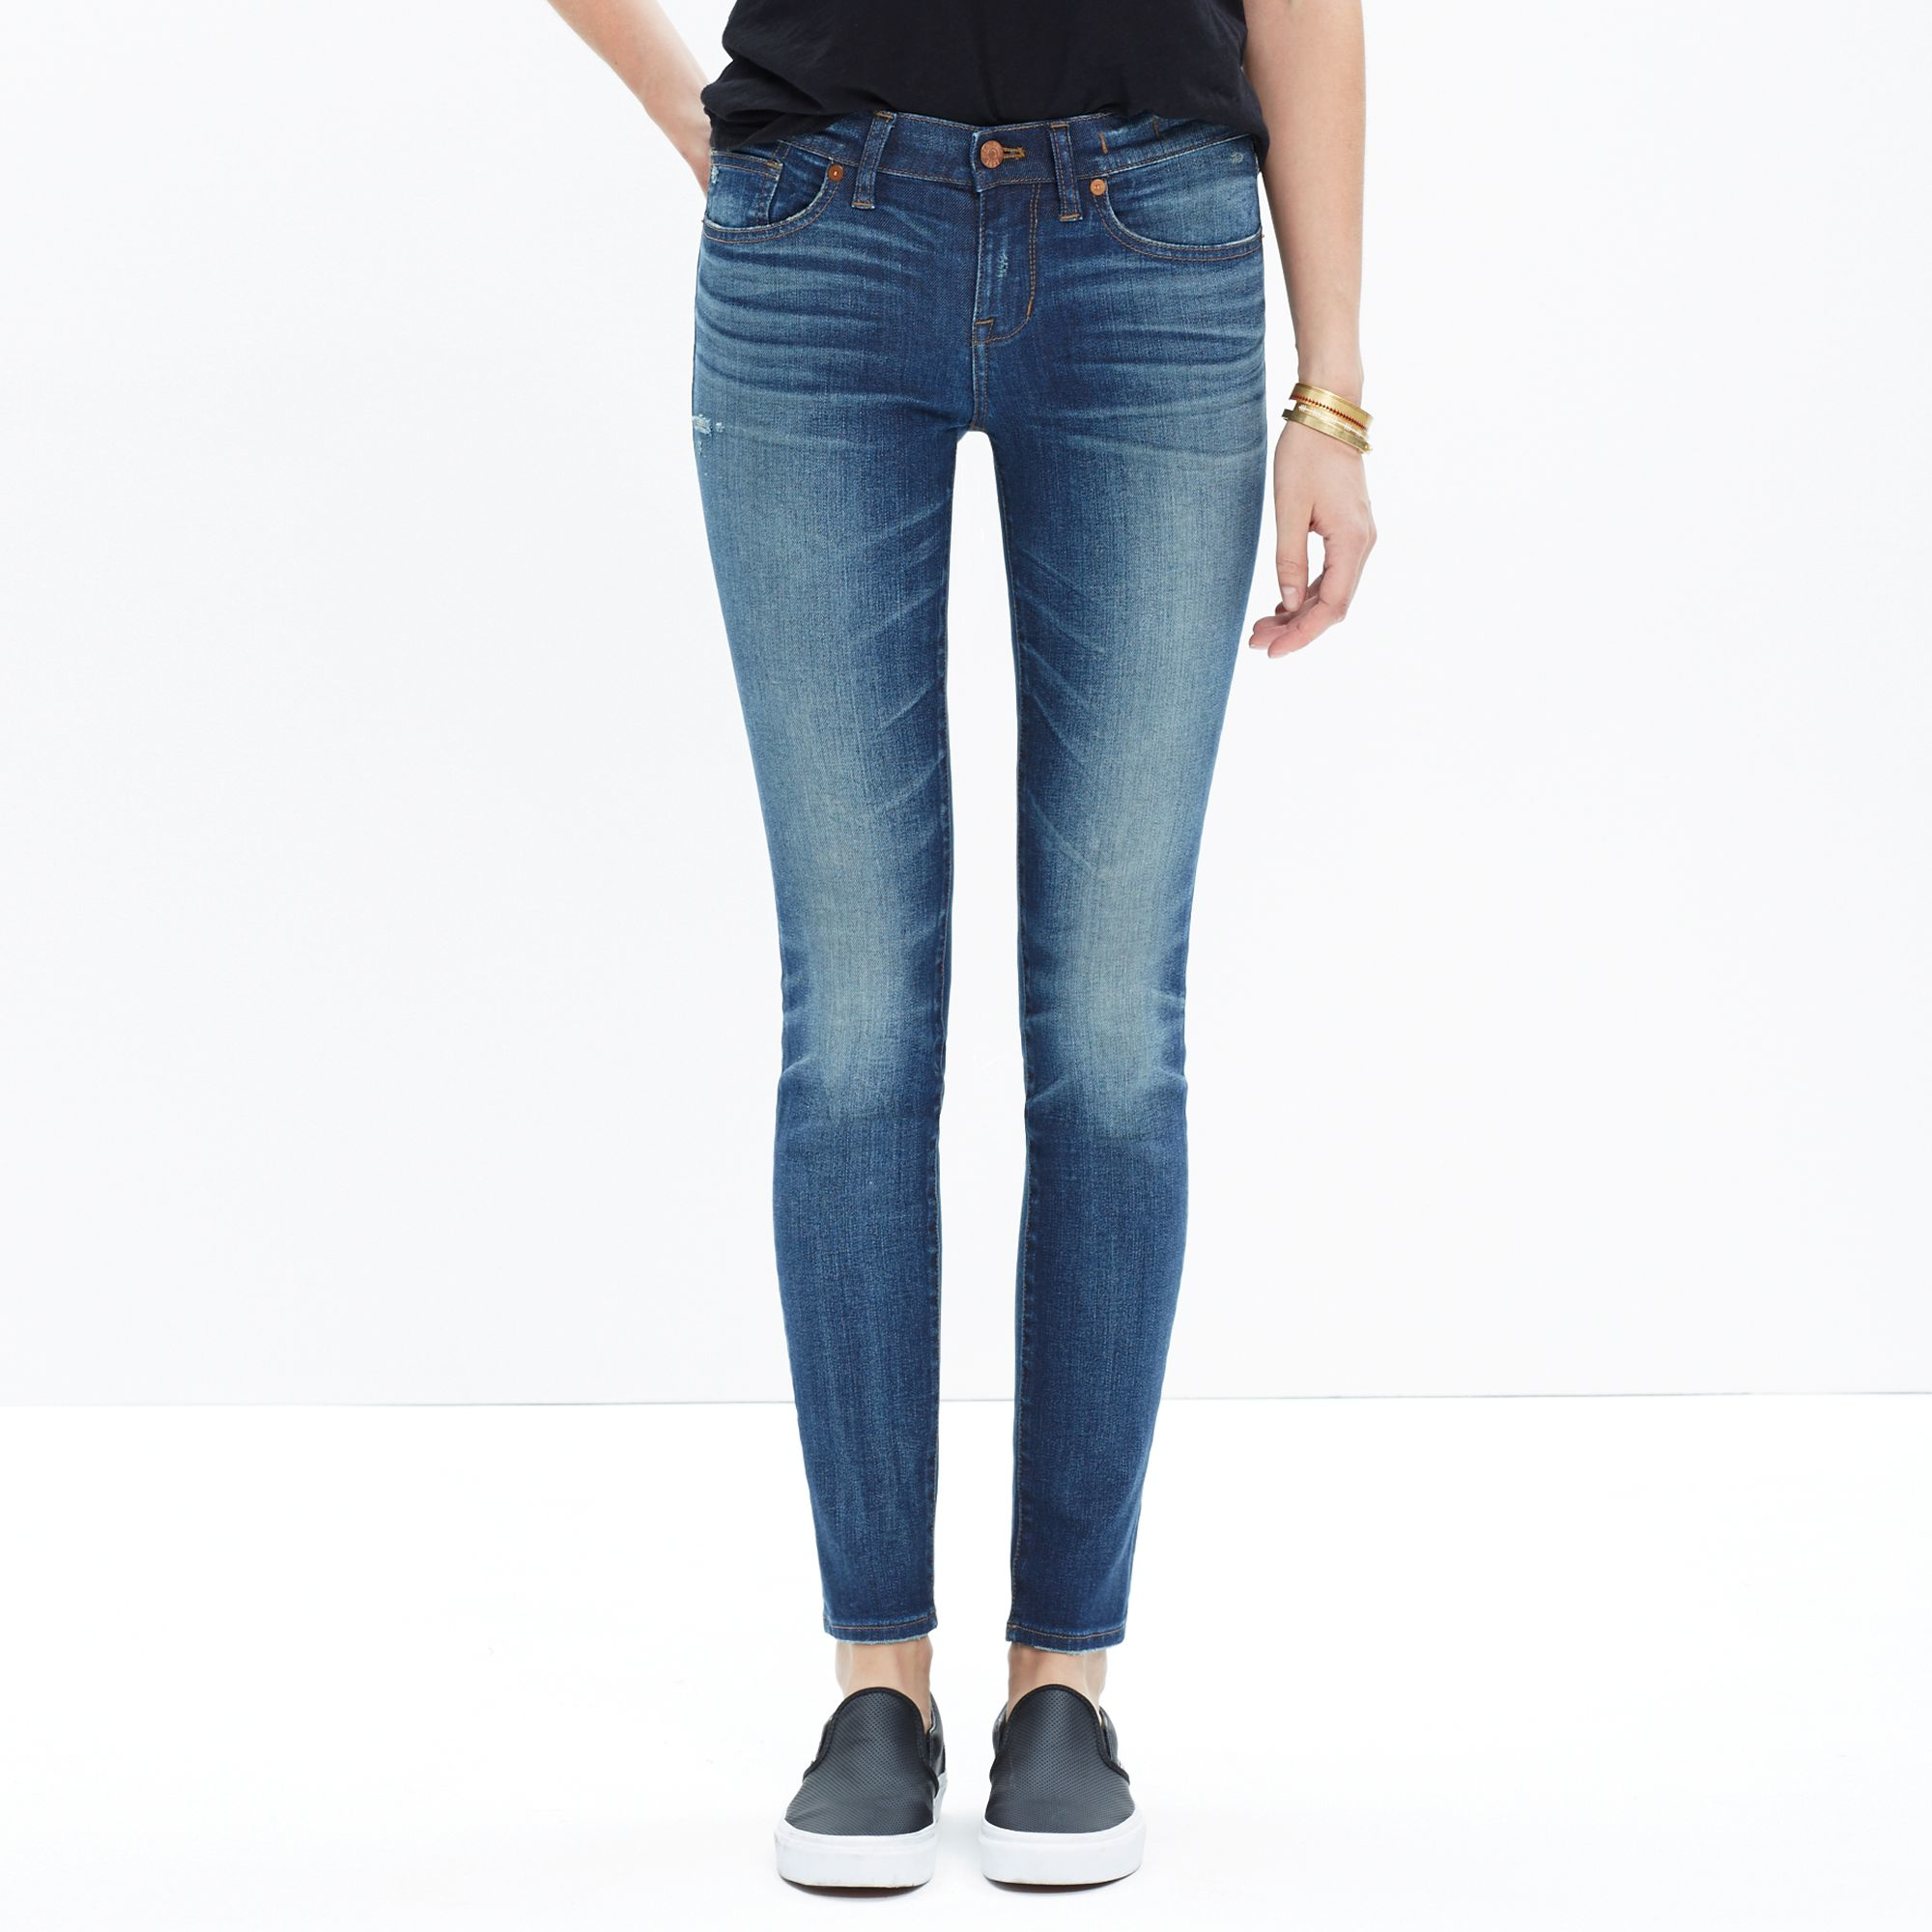 Lyst - Madewell Taller Skinny Skinny Jeans In Edmonton Wash in Blue